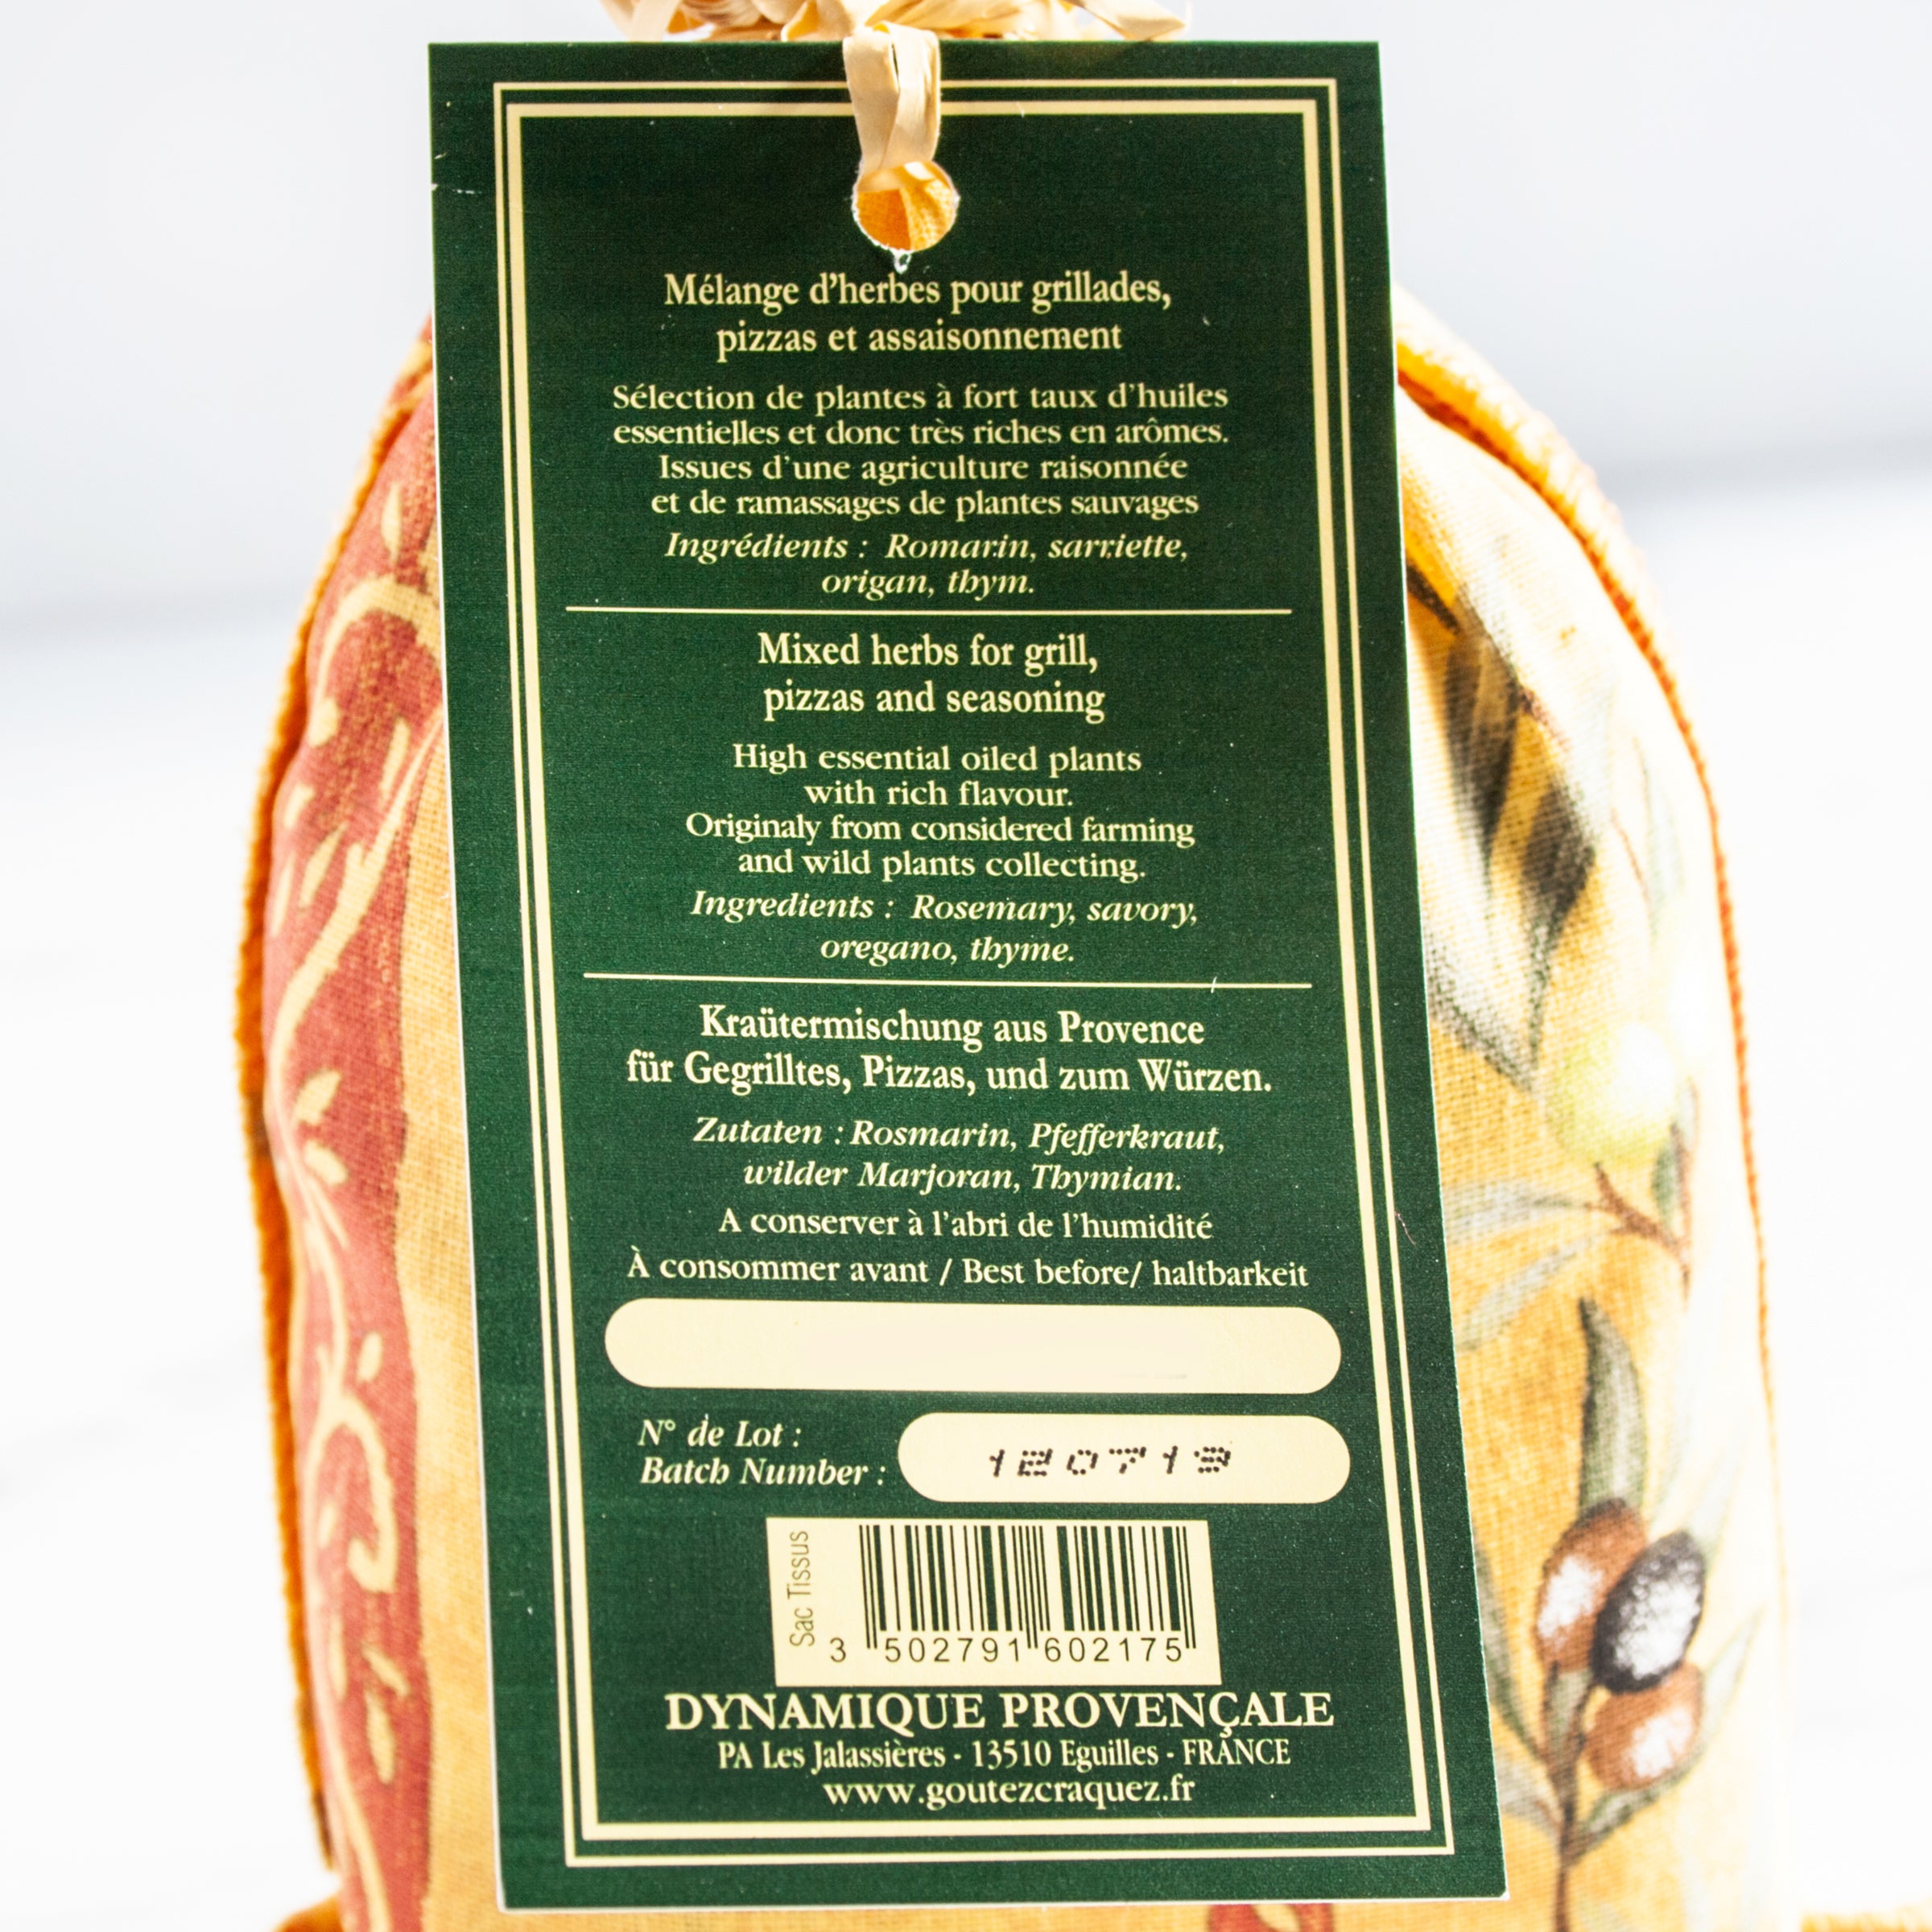 igourmet_747_Herves de Provence in Linen Bag_Le Vieux_Rubs, Spices & Seasonings